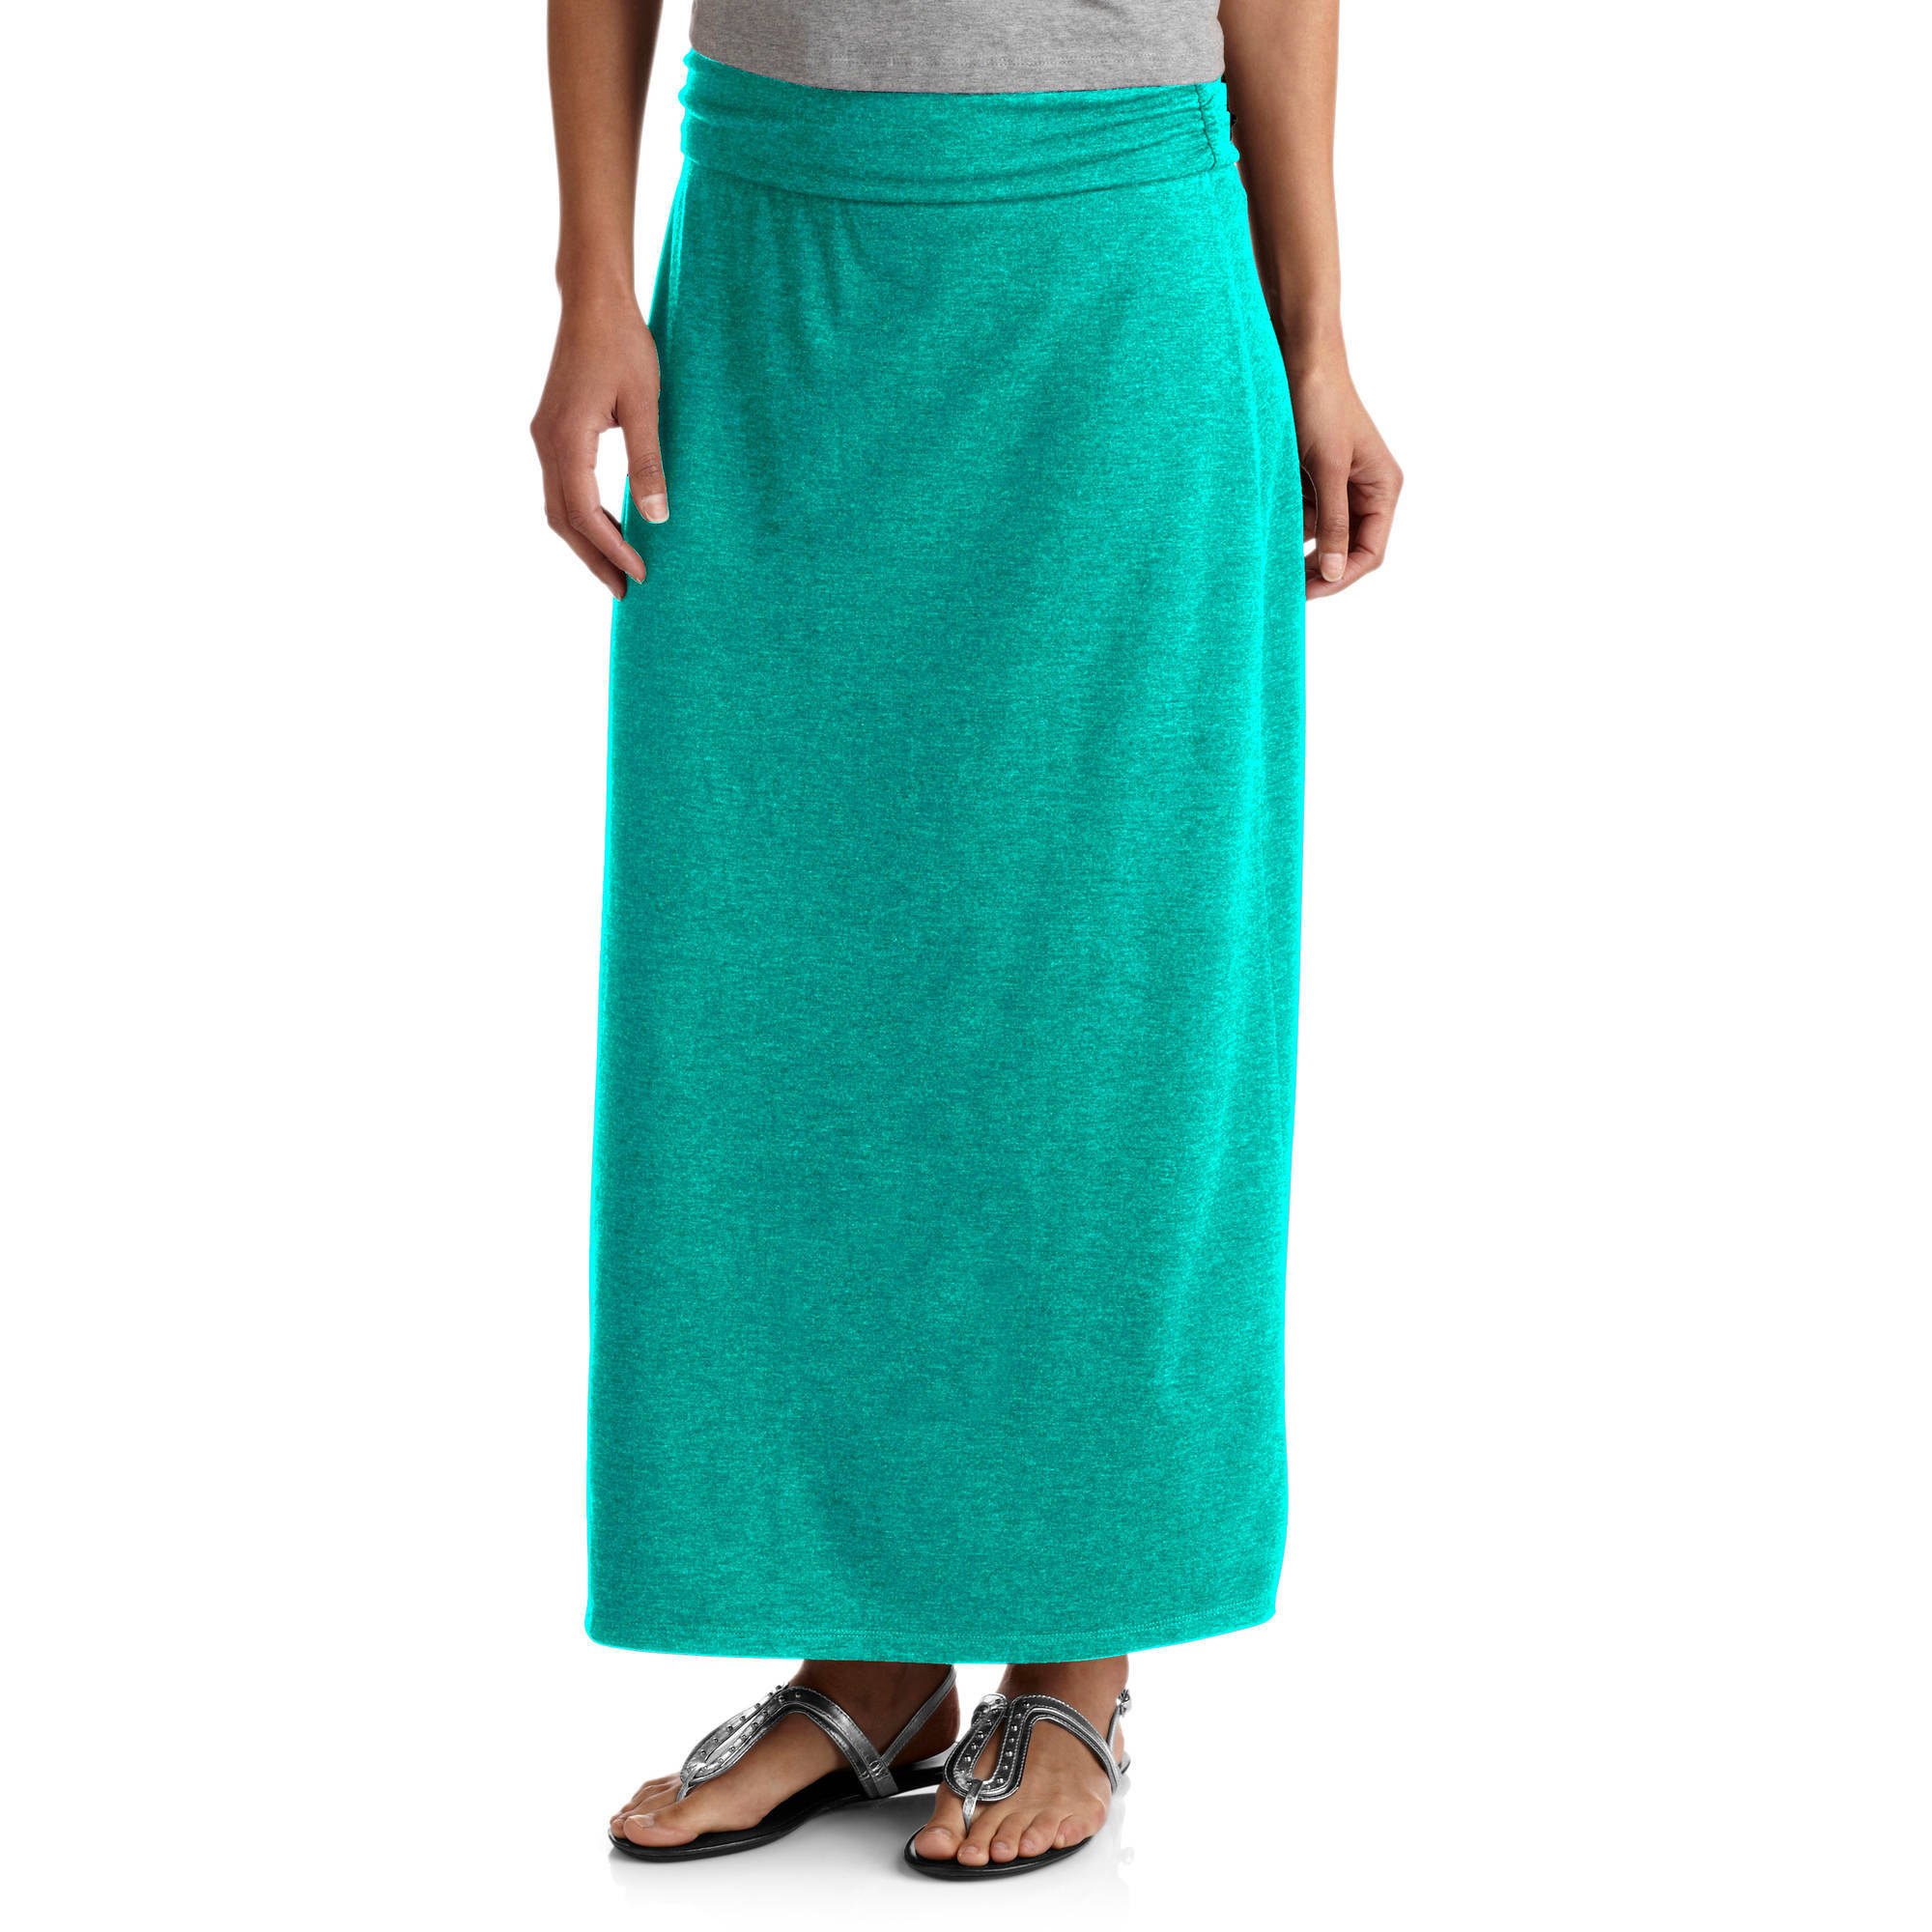 Women's Fashion Maxi Skirt with Shirred Waistband - image 1 of 1